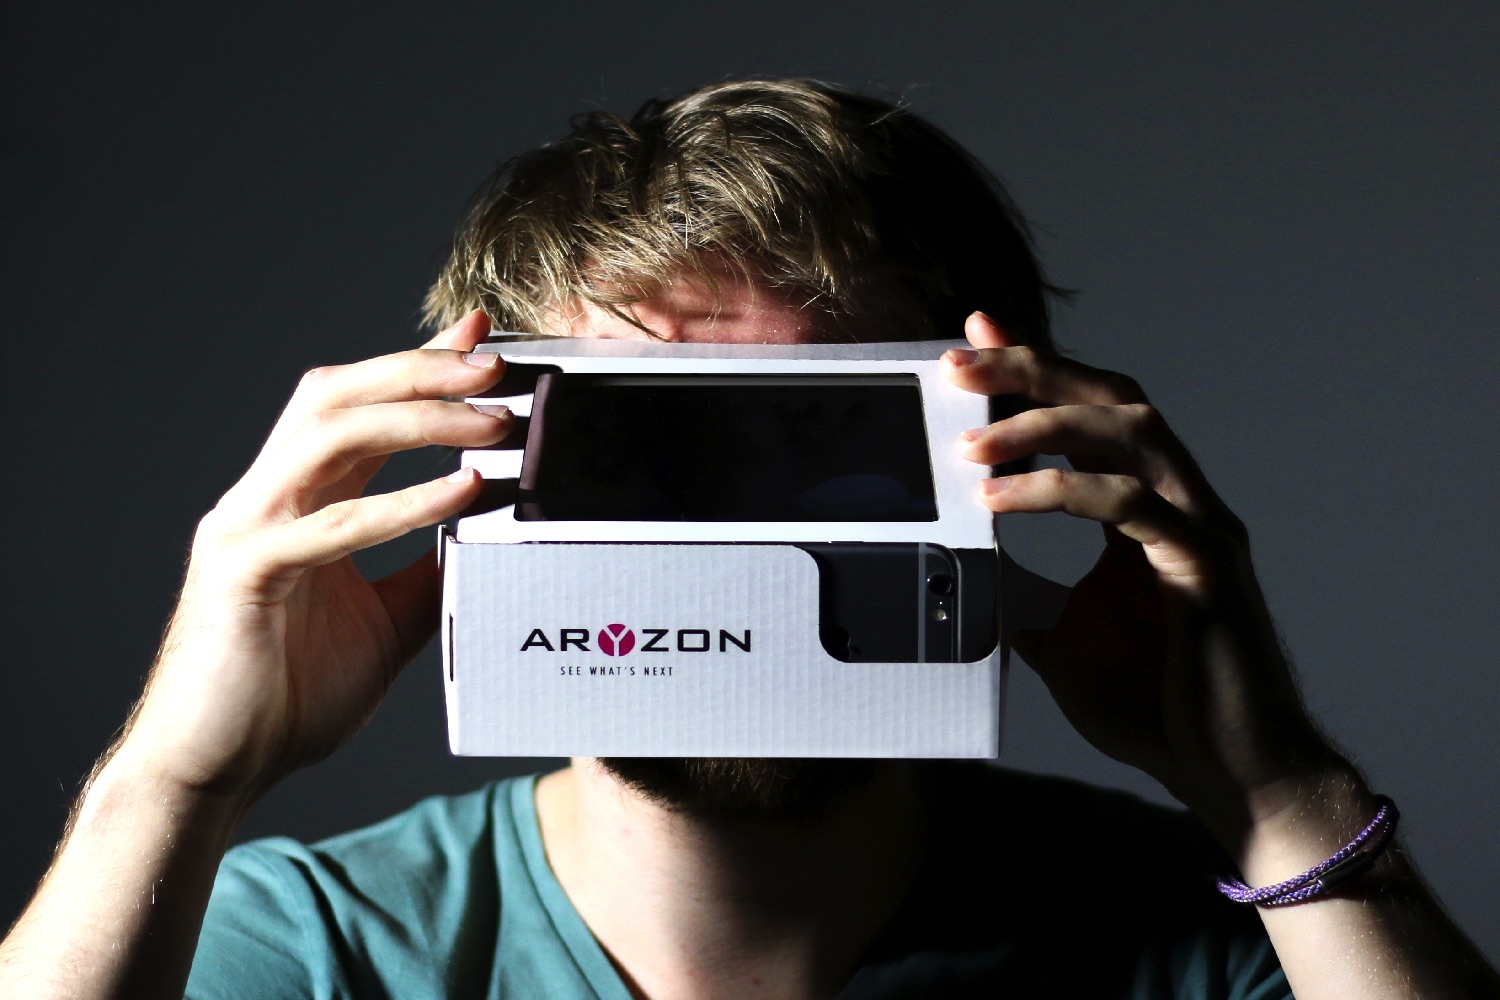 aryzon augmented reality kickstarter co founder using